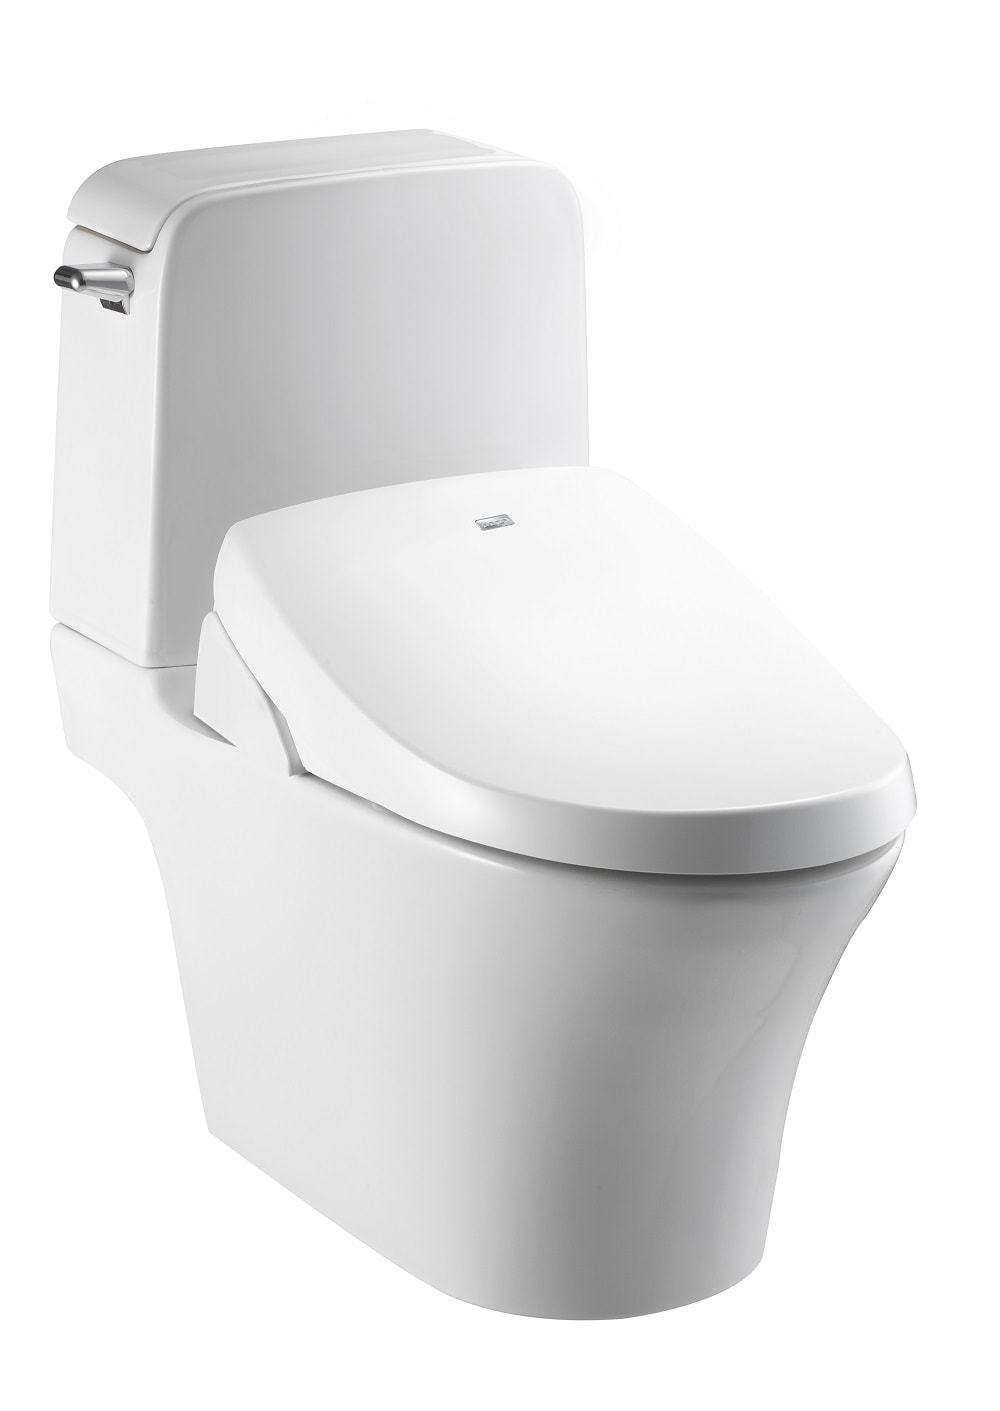 Bio Bidet A8 Serenity Bidet Toilet Seat